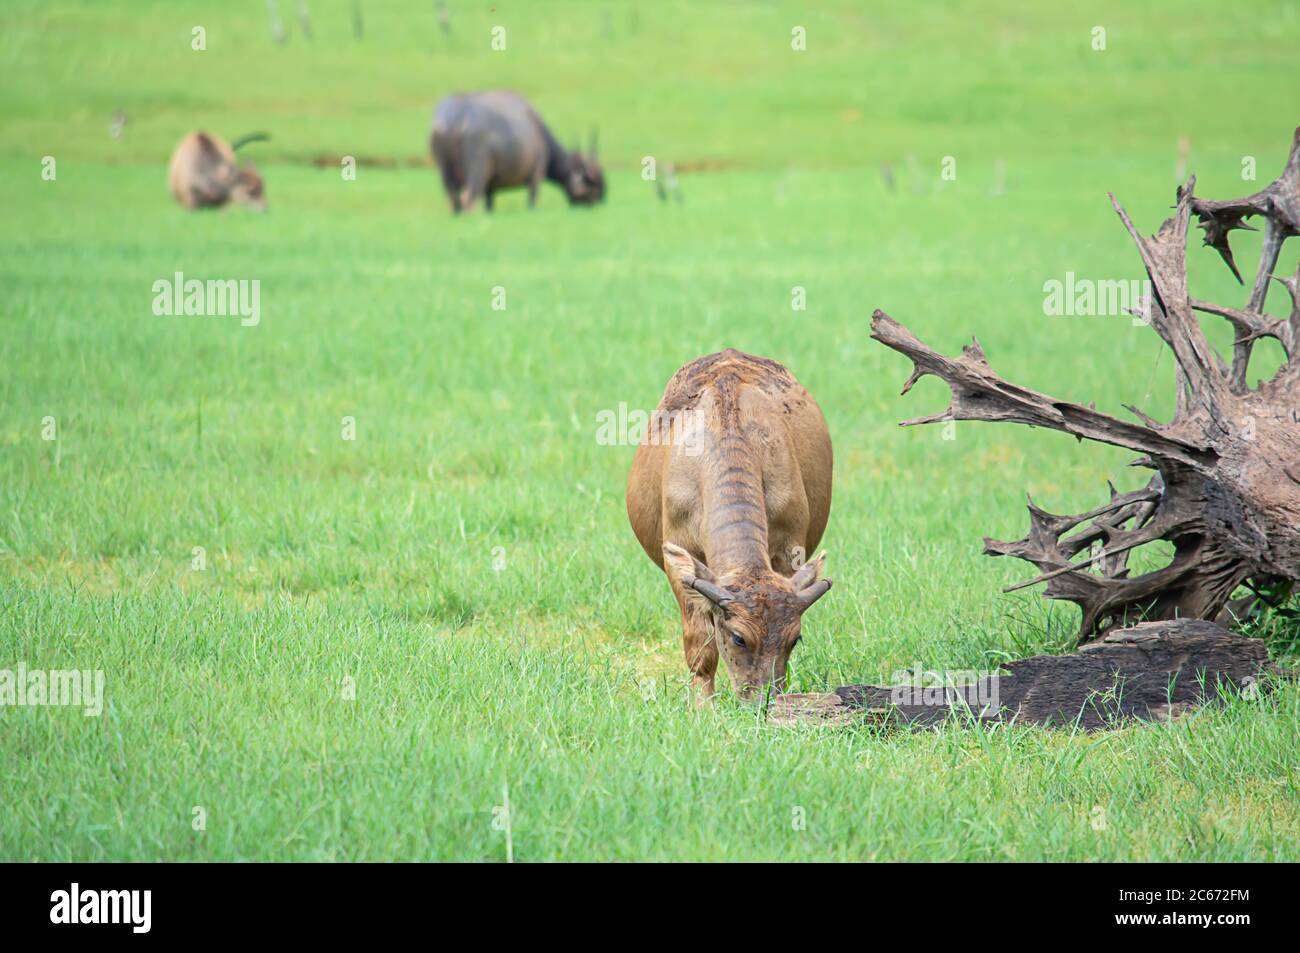 A buffalo eating grass on a meadow. Stock Photo